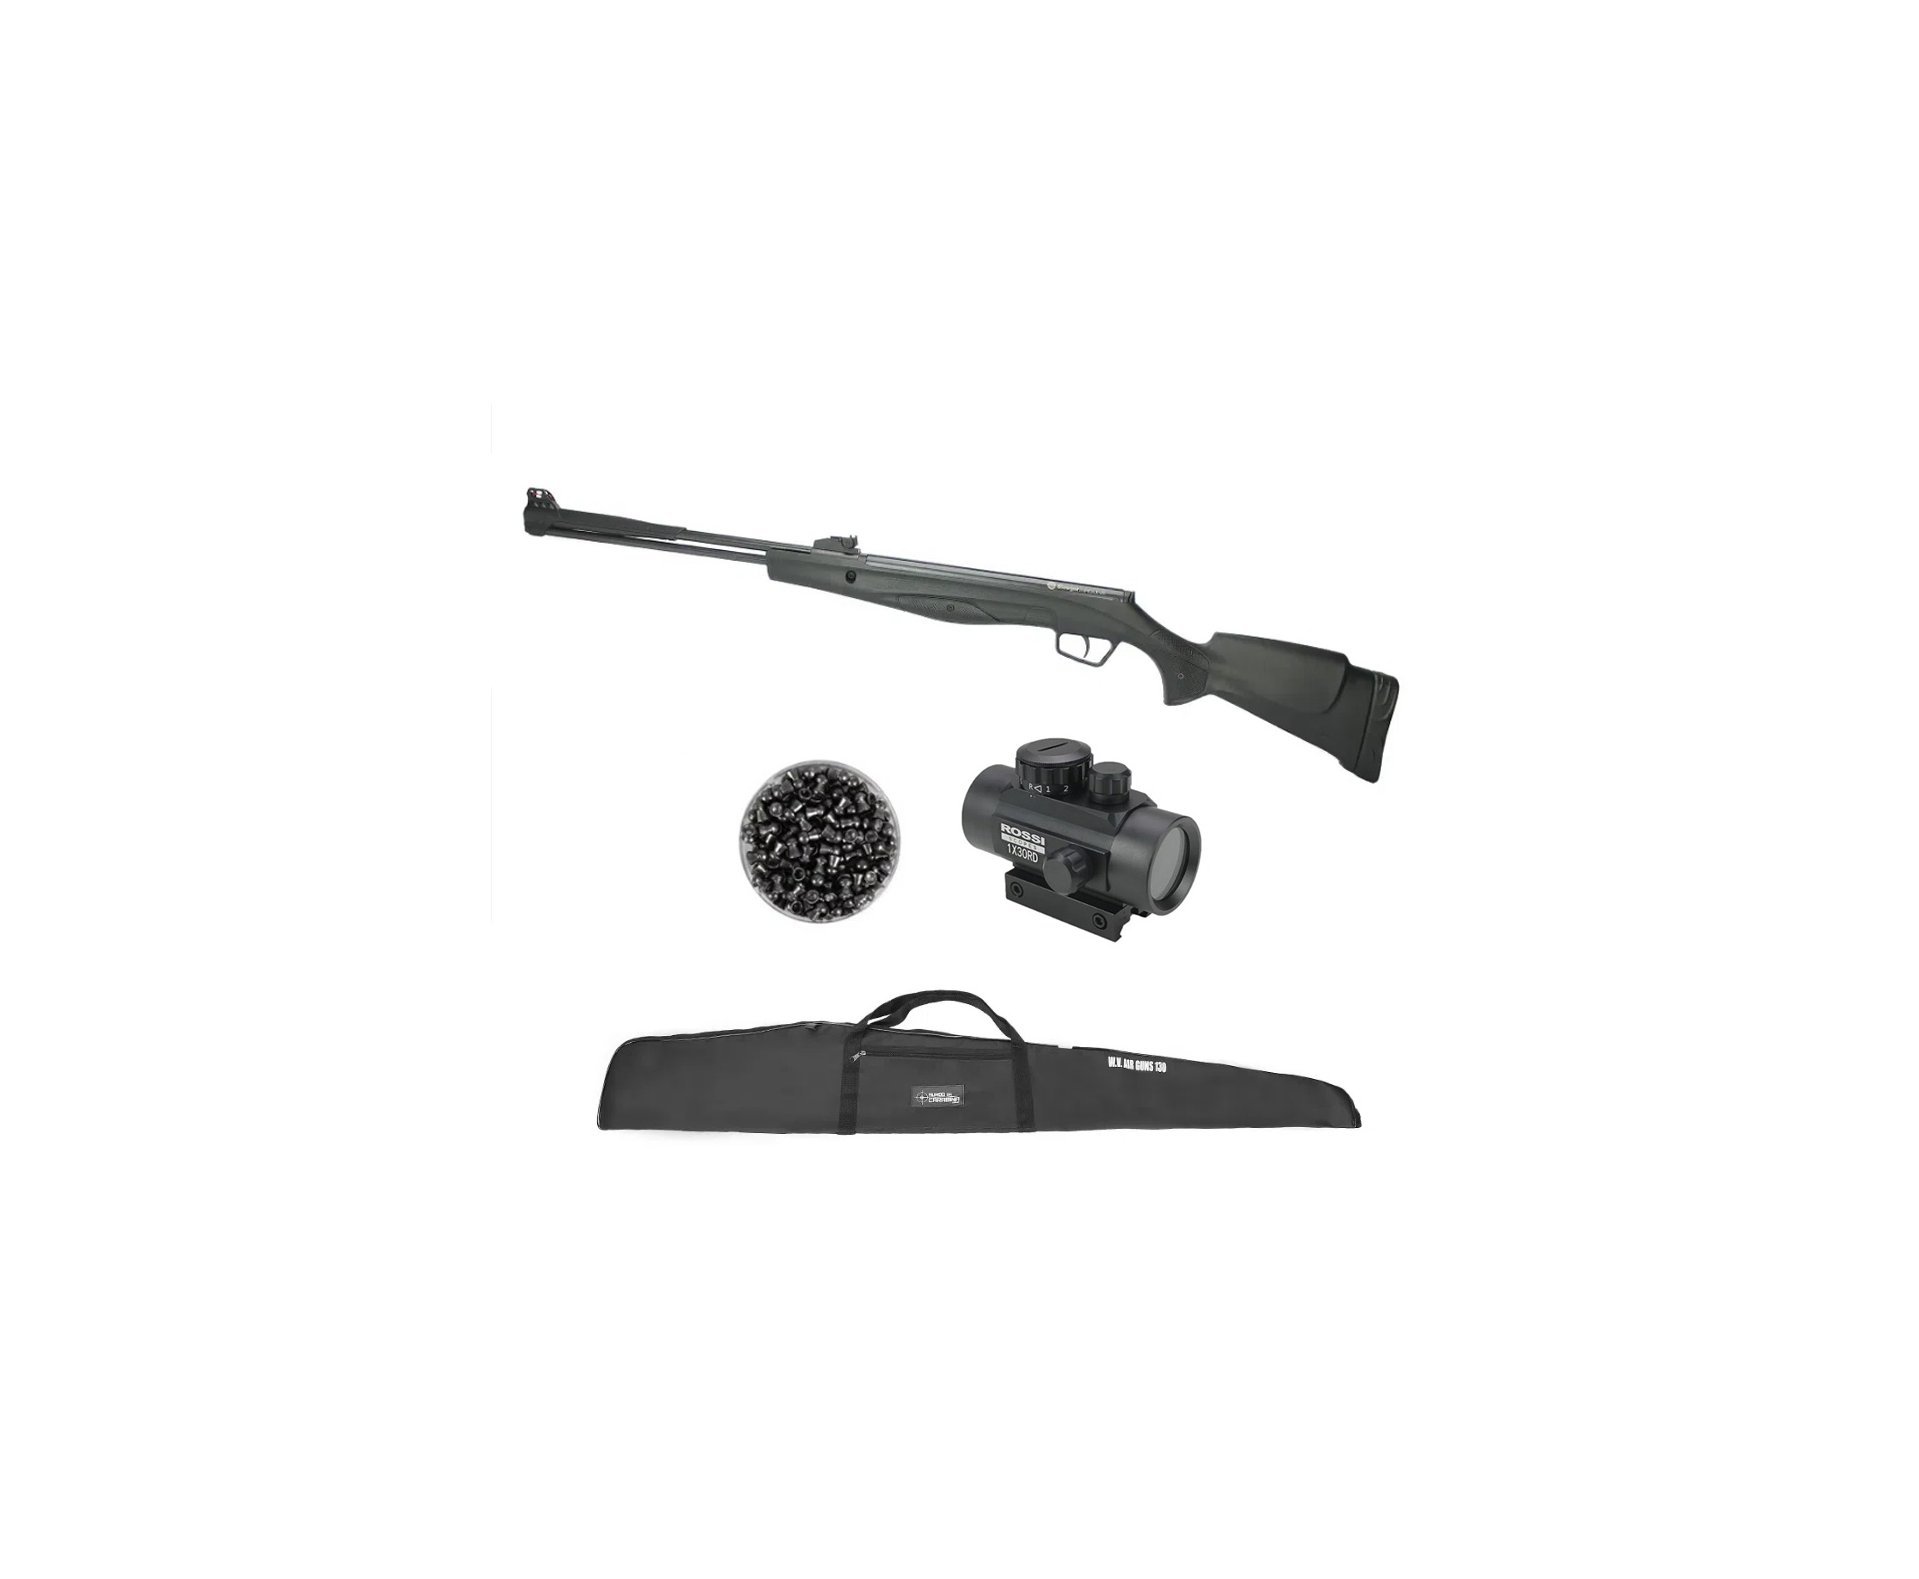 Carabina De Pressão Stoeger Rx40 Nitro 4.5mm Beretta - Fxr + Red Dot + Chumbinho + Capa